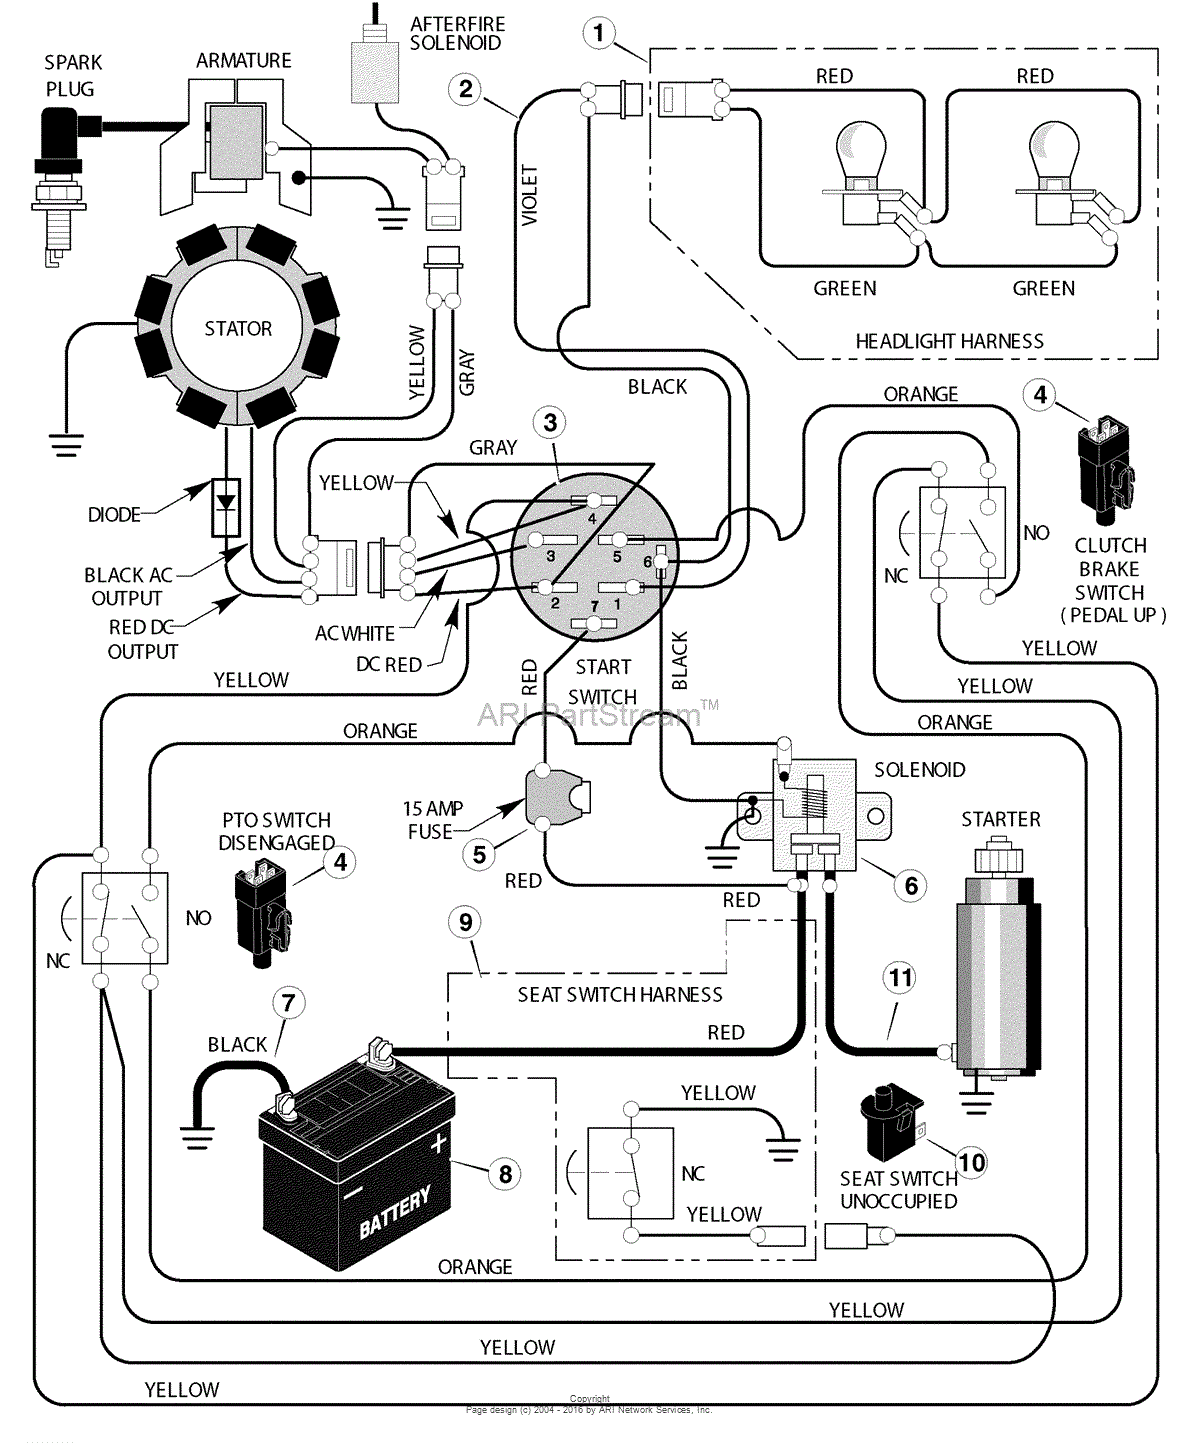 21 Unique Craftsman Lt1000 Ignition Switch Diagram